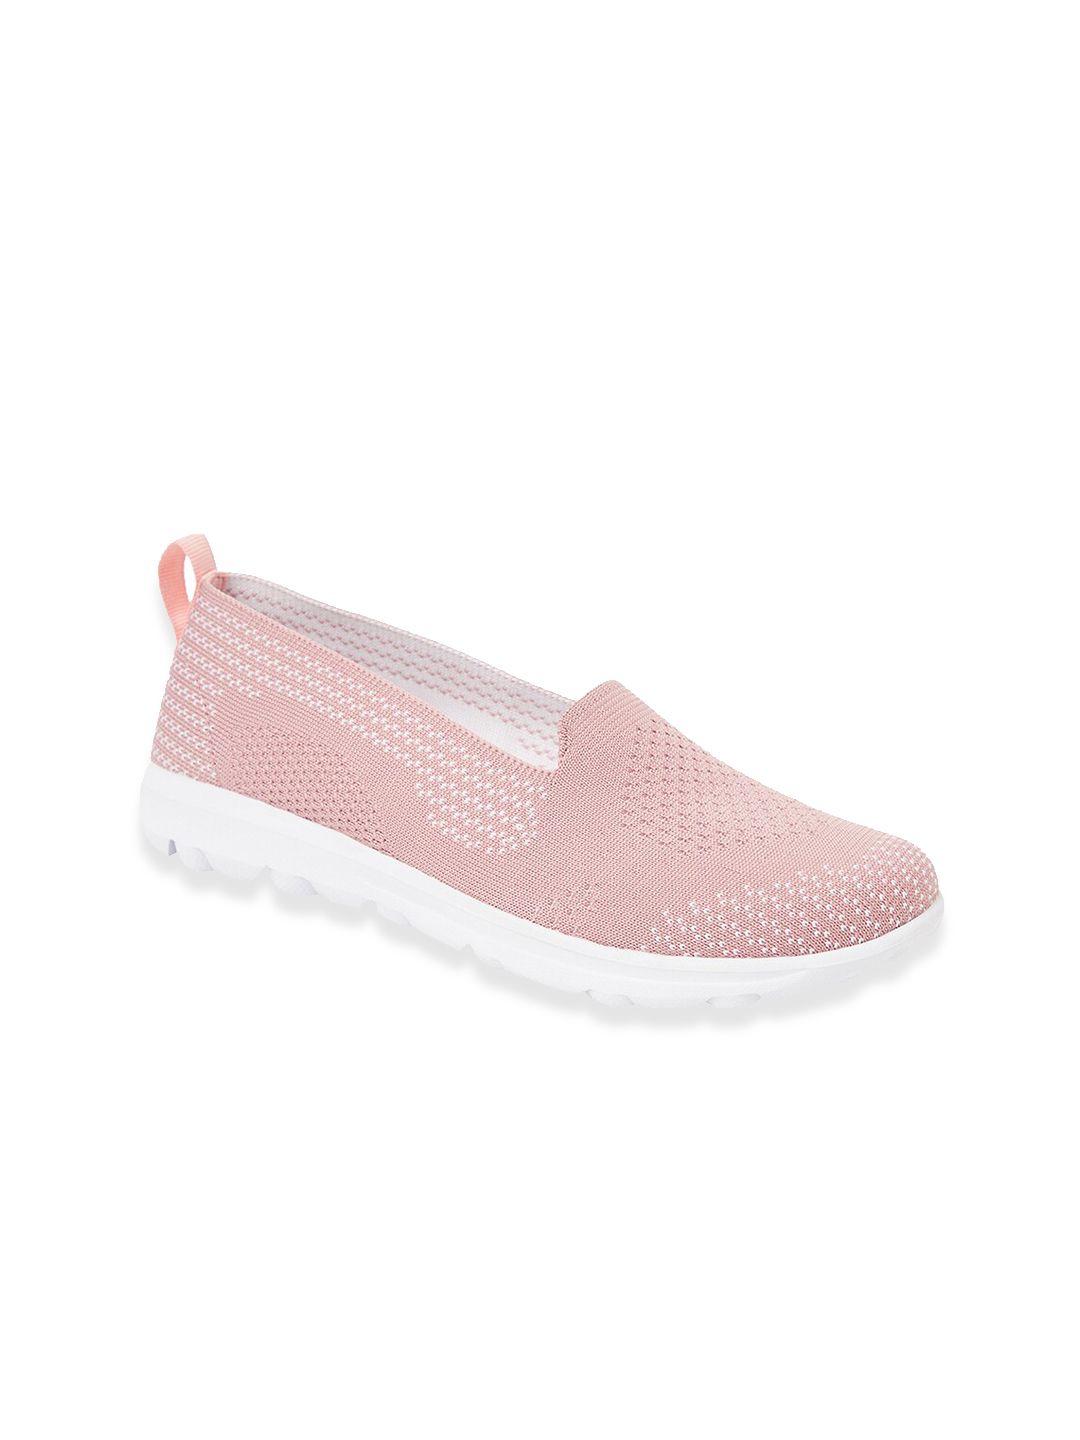 Lotto Women Pink Mesh Walking Shoes Price in India